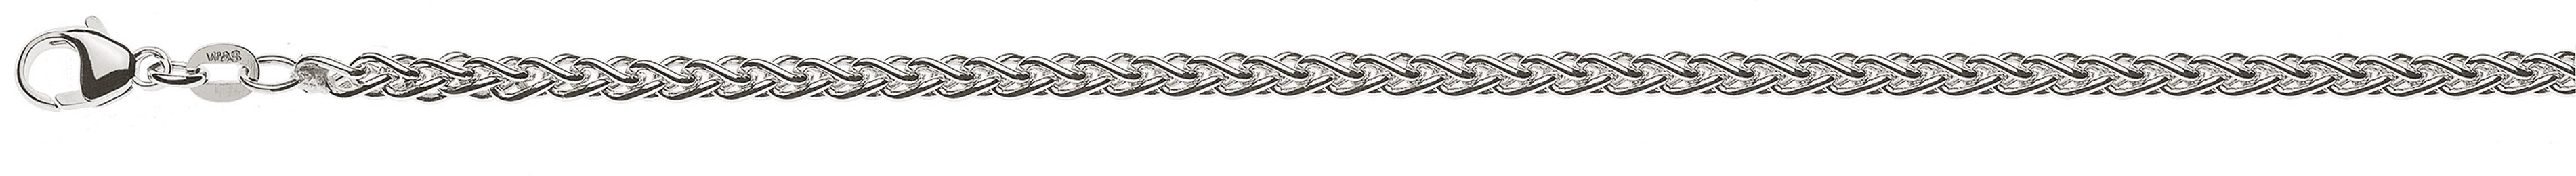 AURONOS Prestige Collier or blanc 18K chaîne câble 50cm 3.3mm